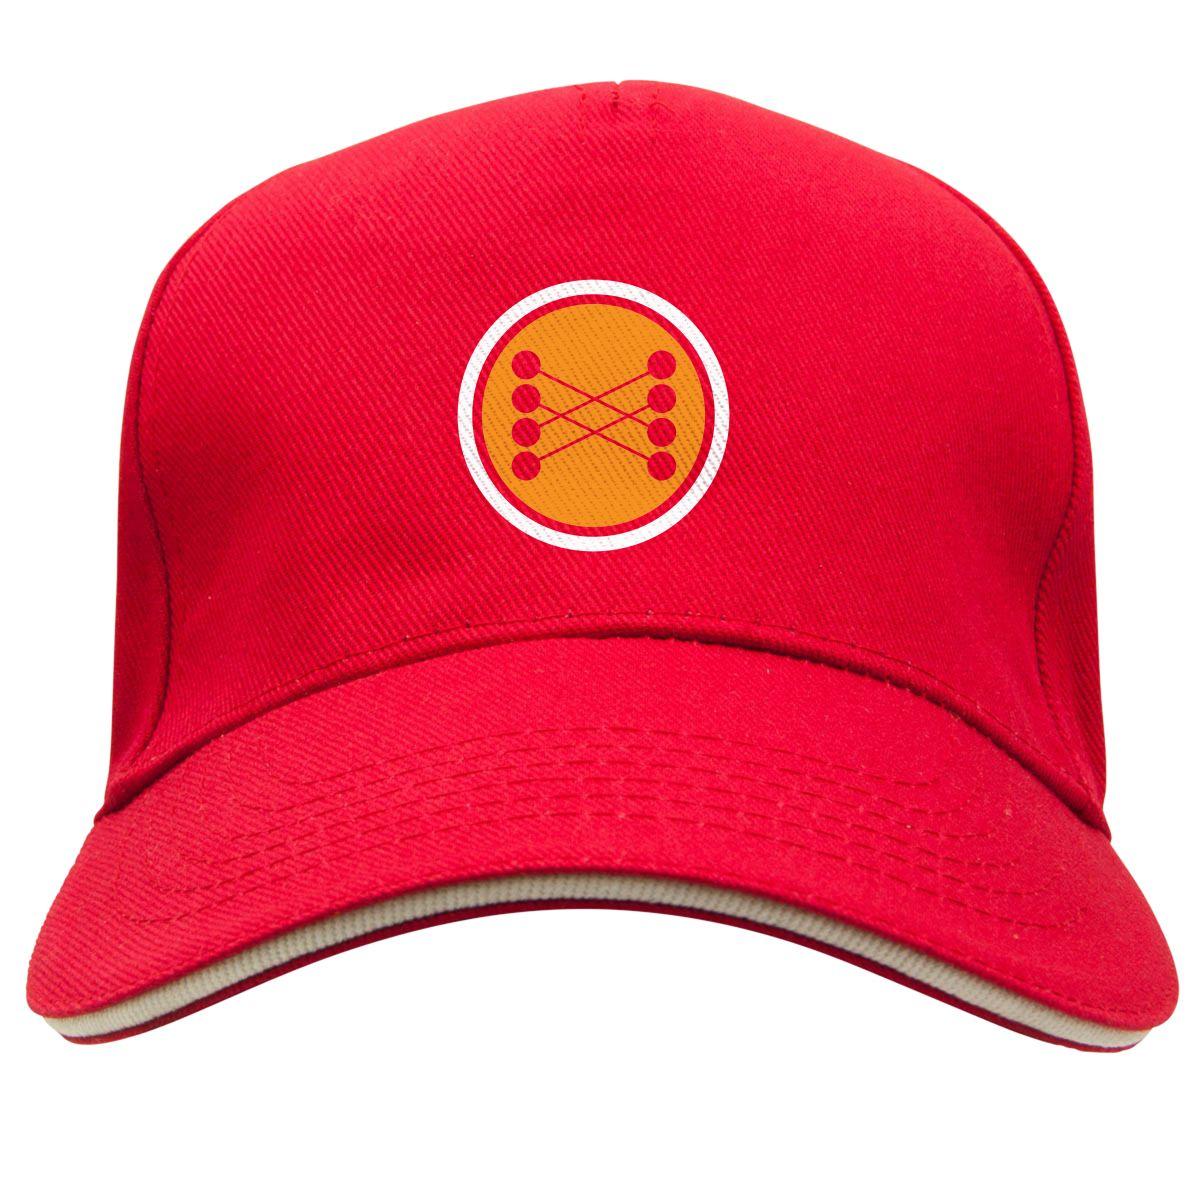 Red and White Peak Logo - BACK TO THE FUTURE: FUSION LOGO Sandwich Peak Cap